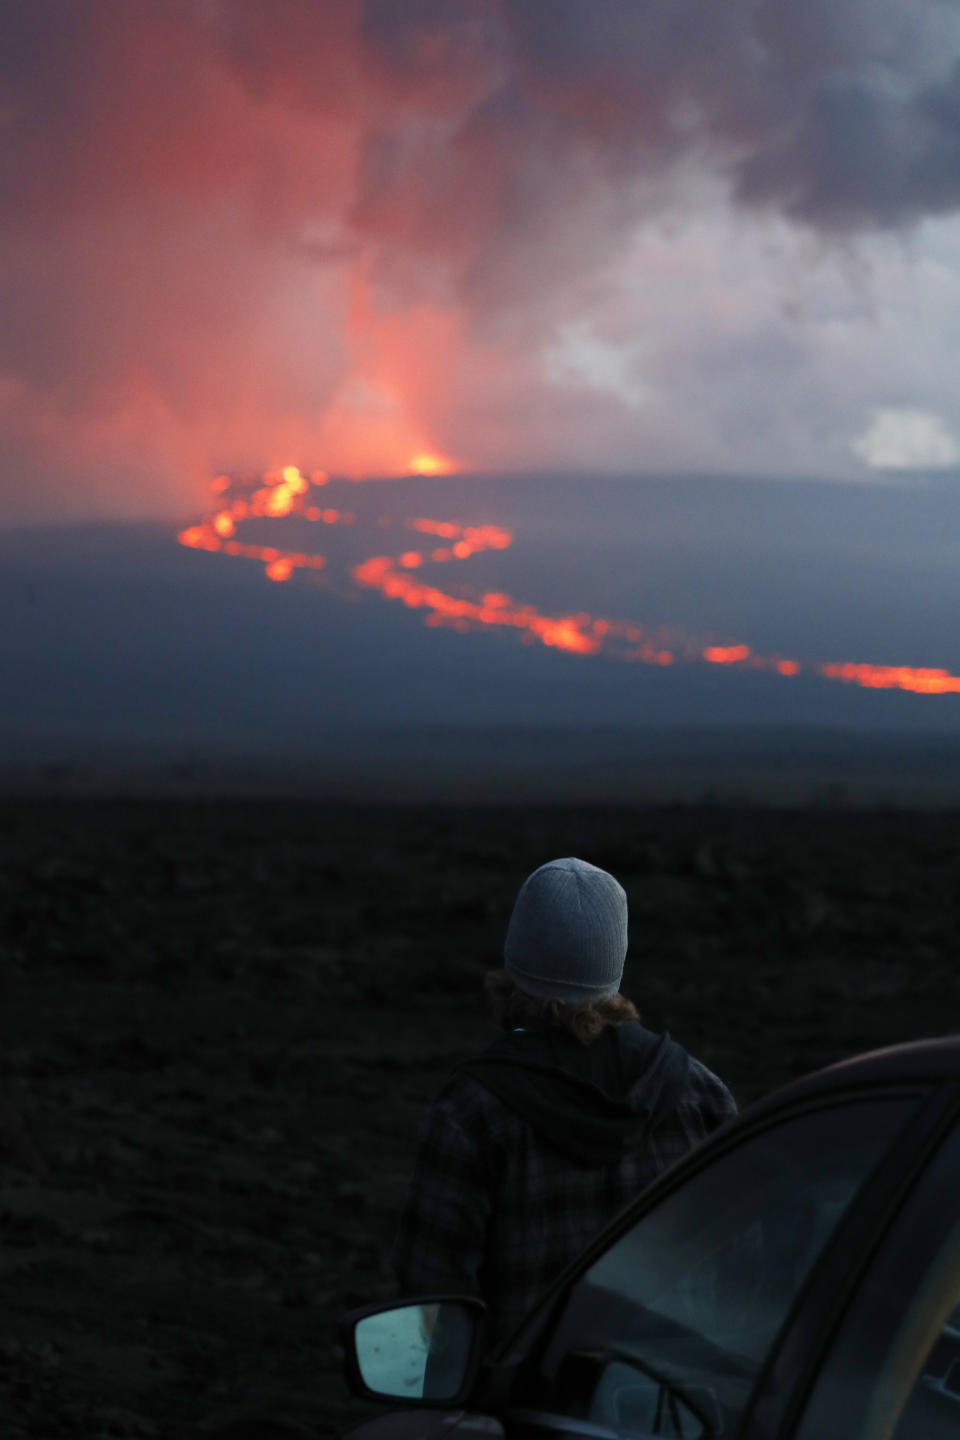 A spectator watches the lava flow down the mountain from the Mauna Loa eruption, Tuesday, Nov. 29, 2022, near Hilo, Hawaii. (AP Photo/Marco Garcia)